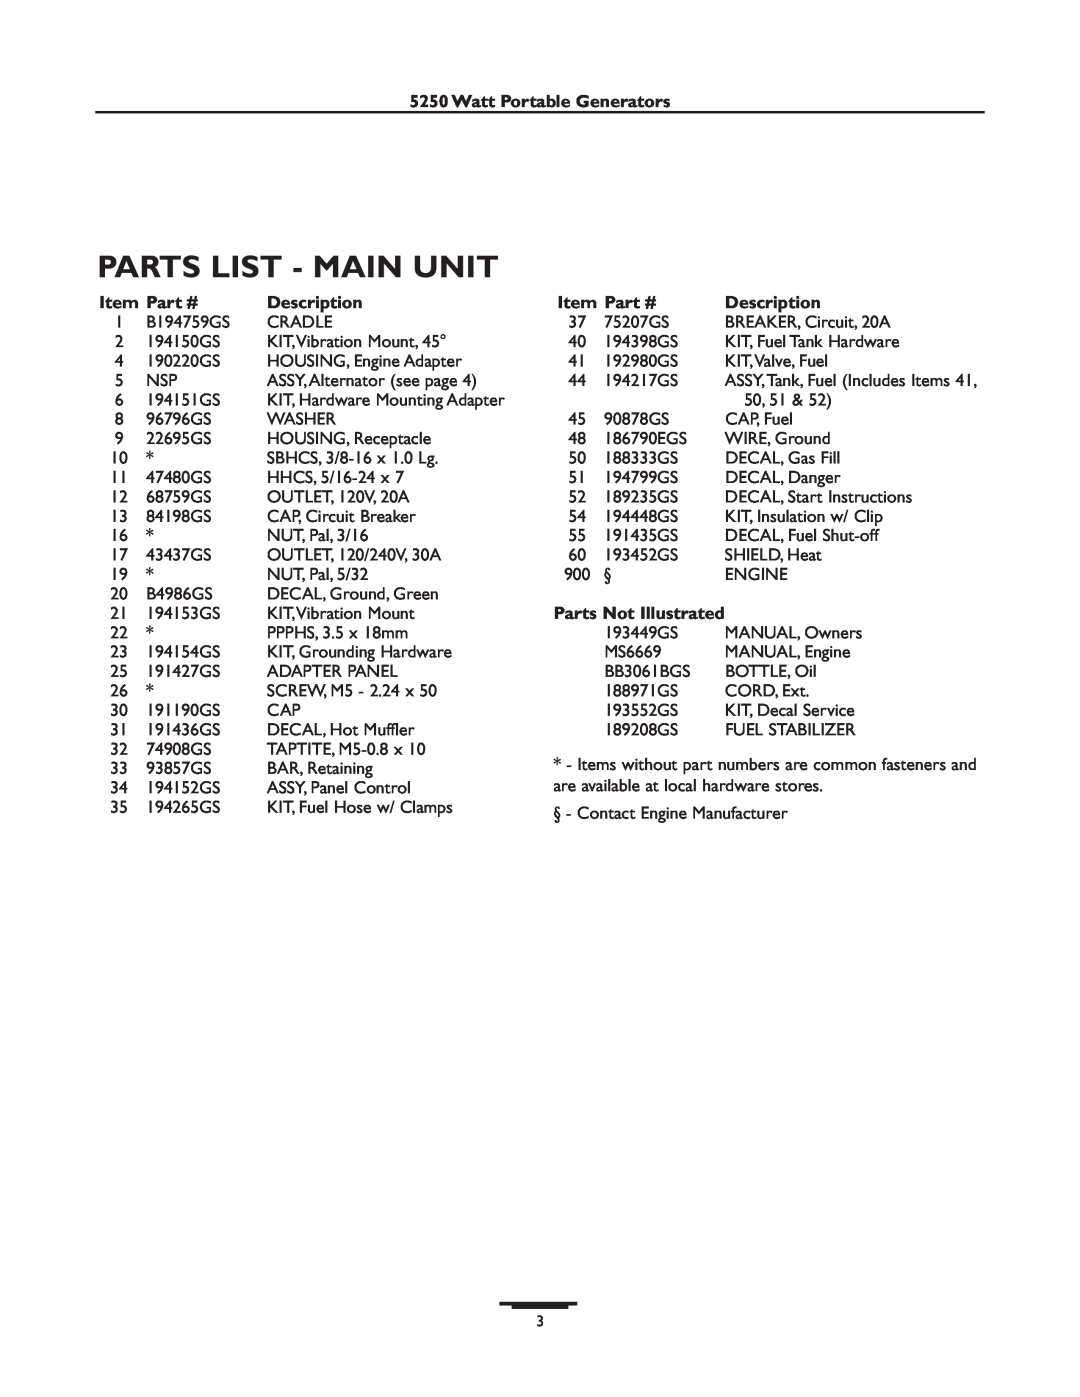 Briggs & Stratton 1971 manual Parts List - Main Unit, Description, Parts Not Illustrated, Watt Portable Generators 